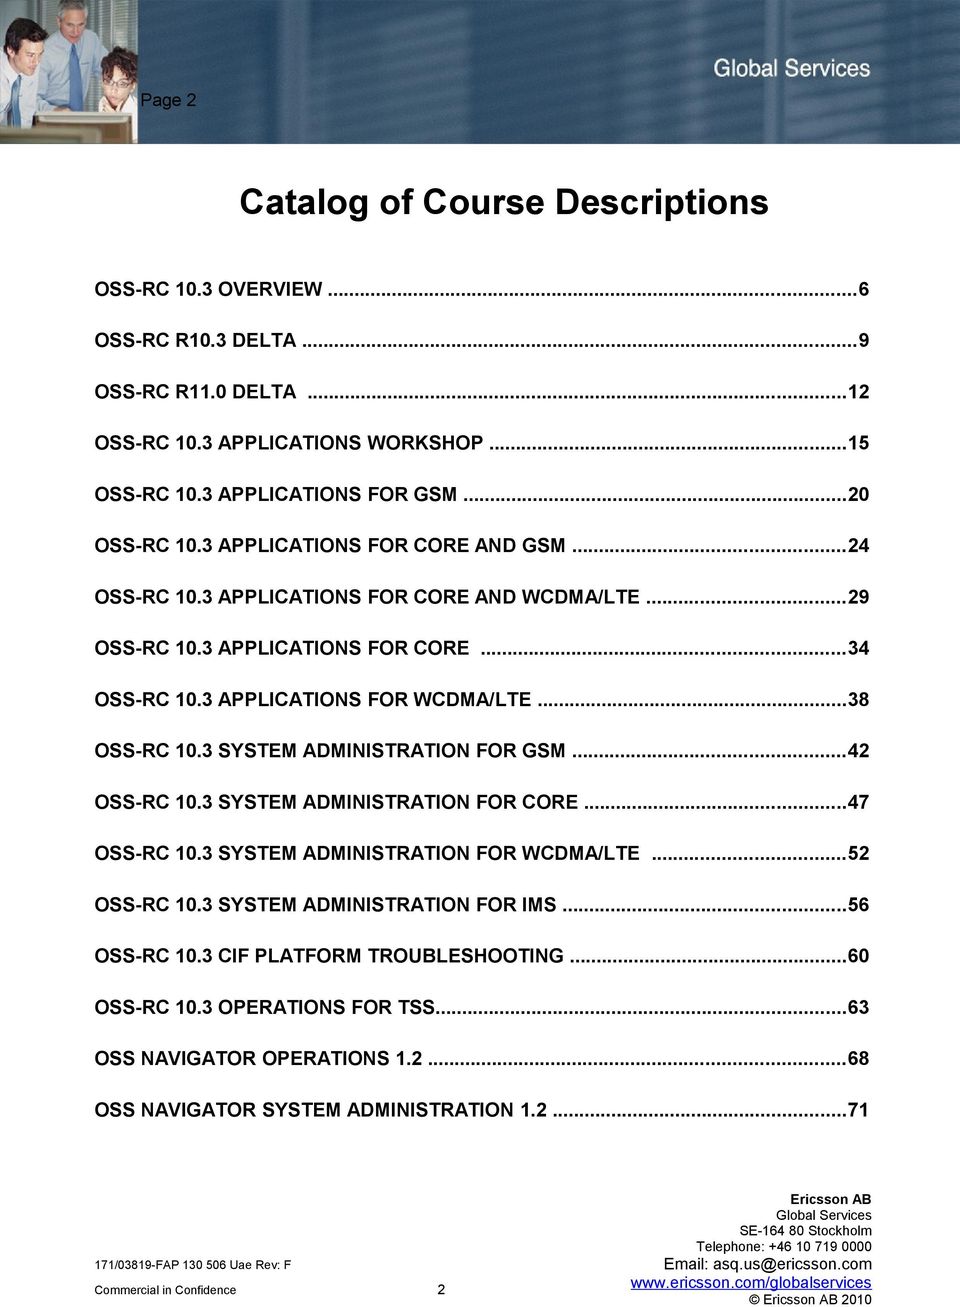 Mobile Oss Oss Rc 7 10 And 11 Training Programs Catalog Of